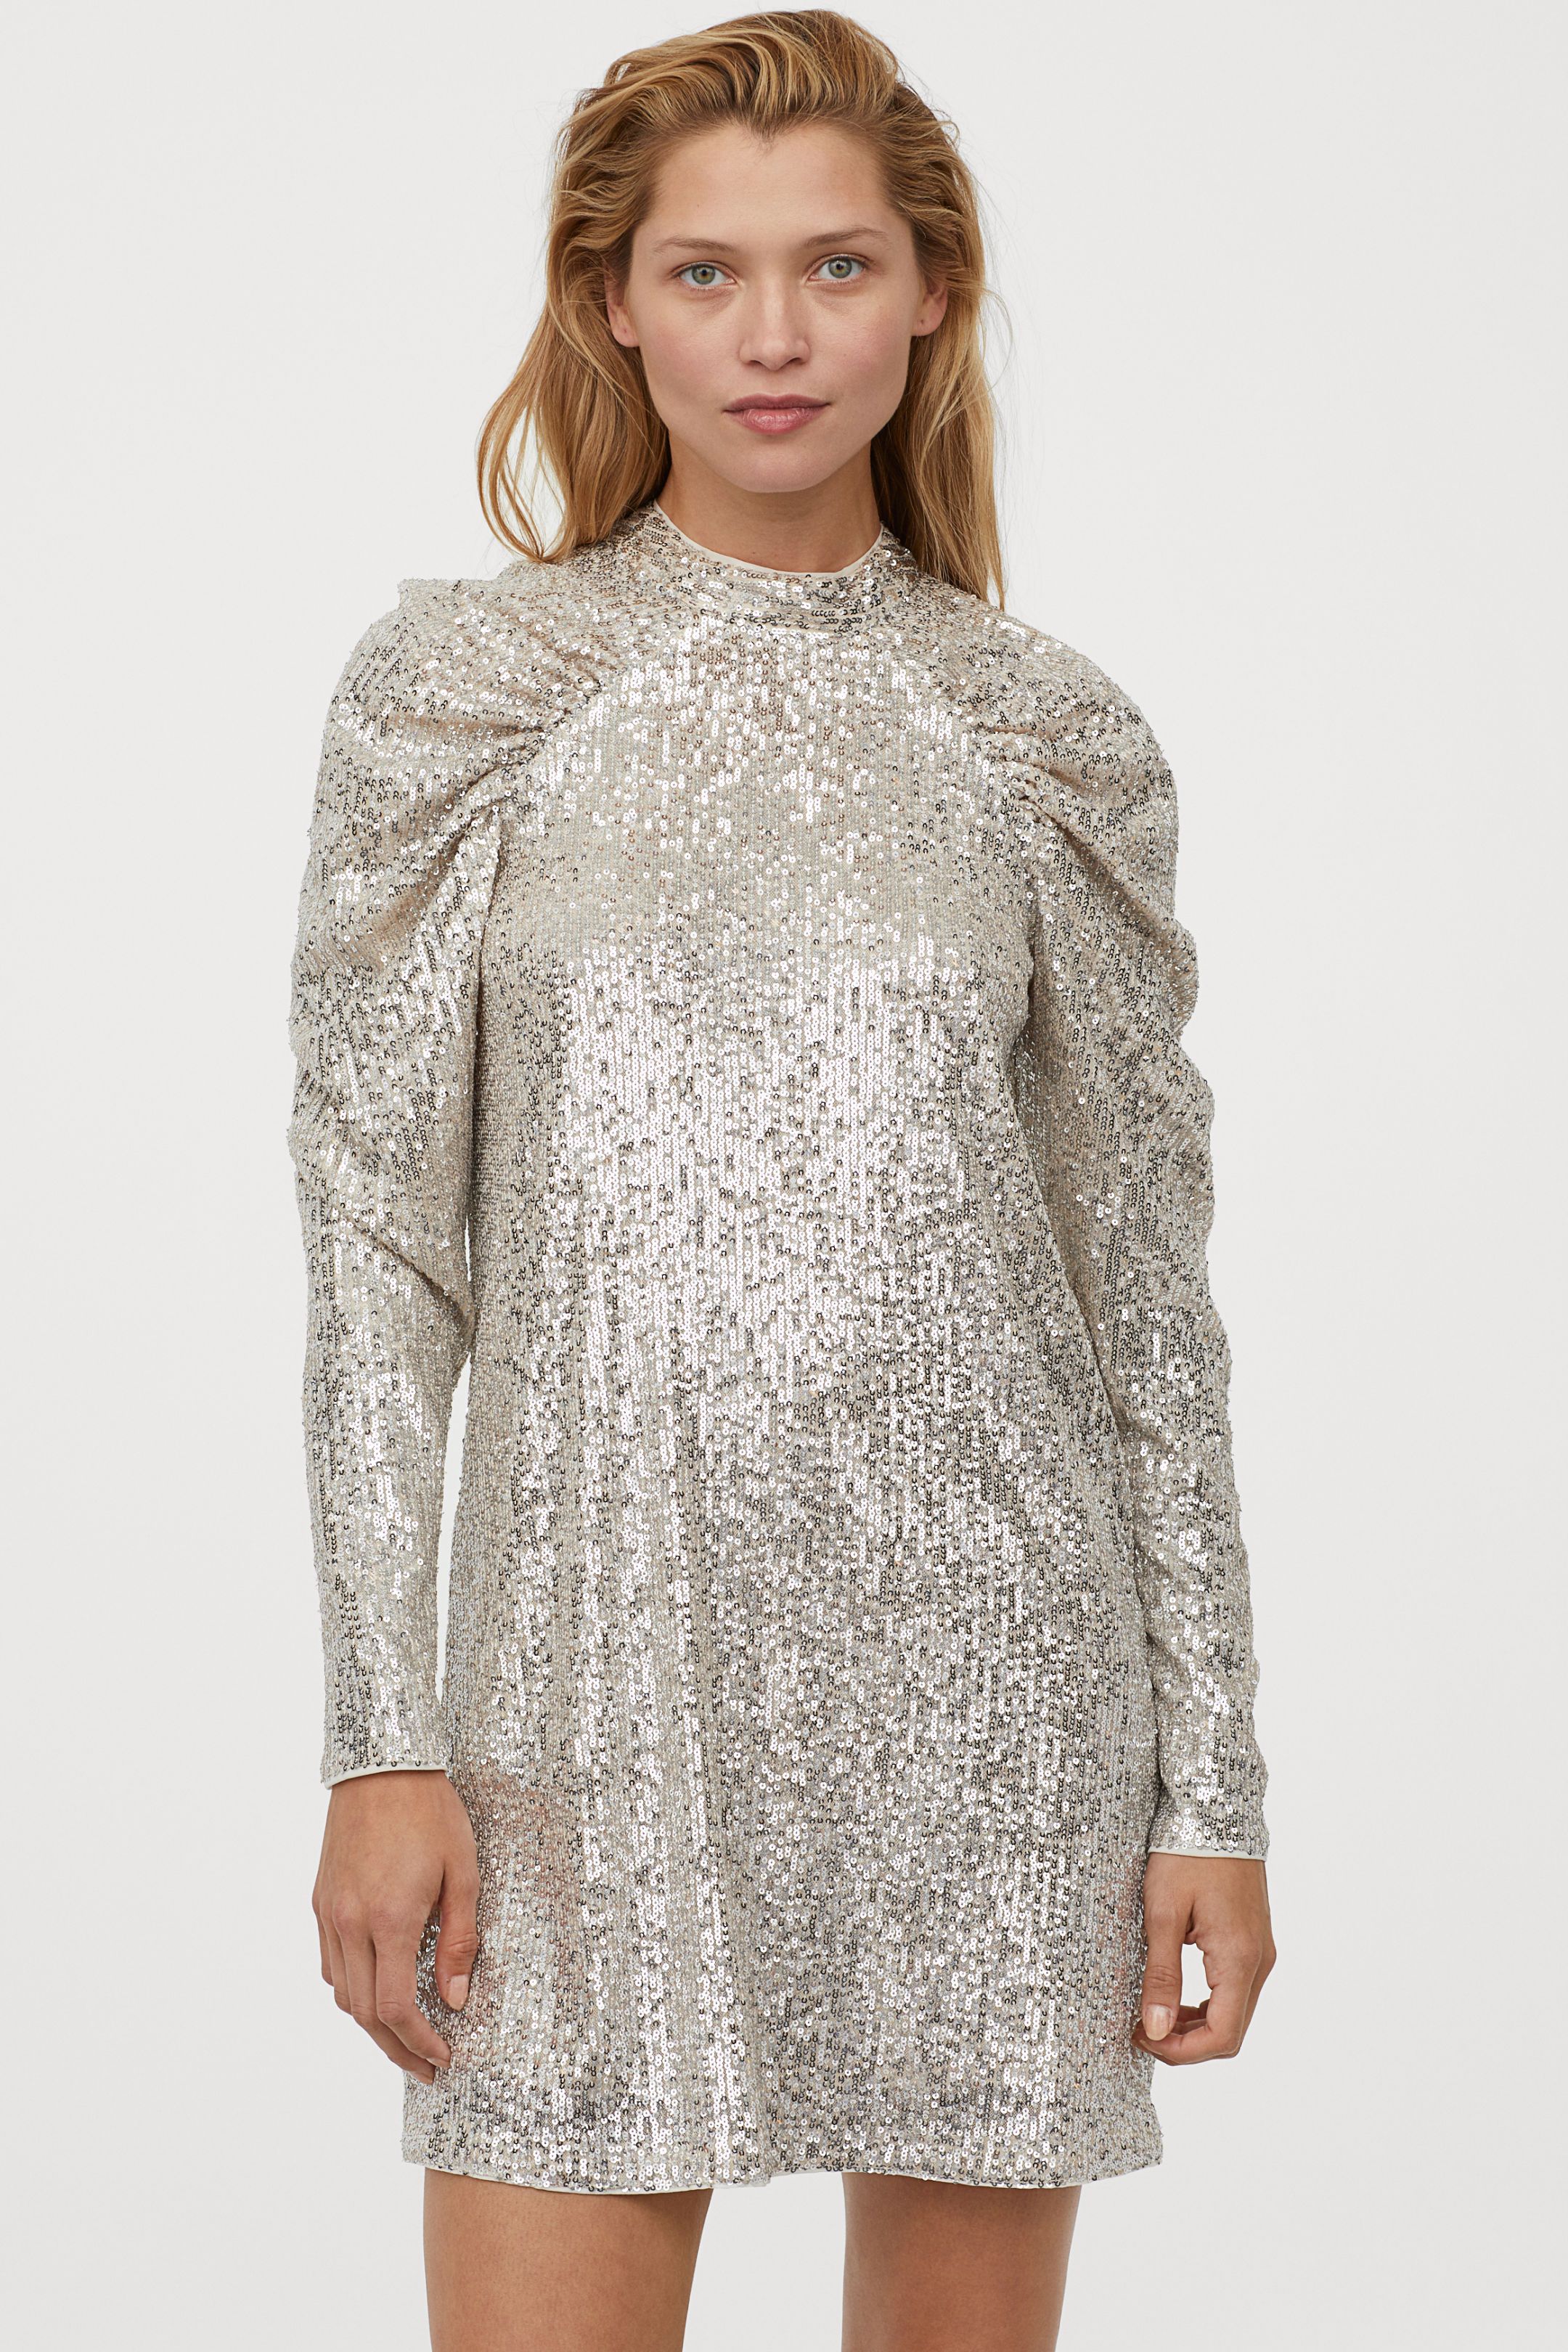 silver sequin dress uk